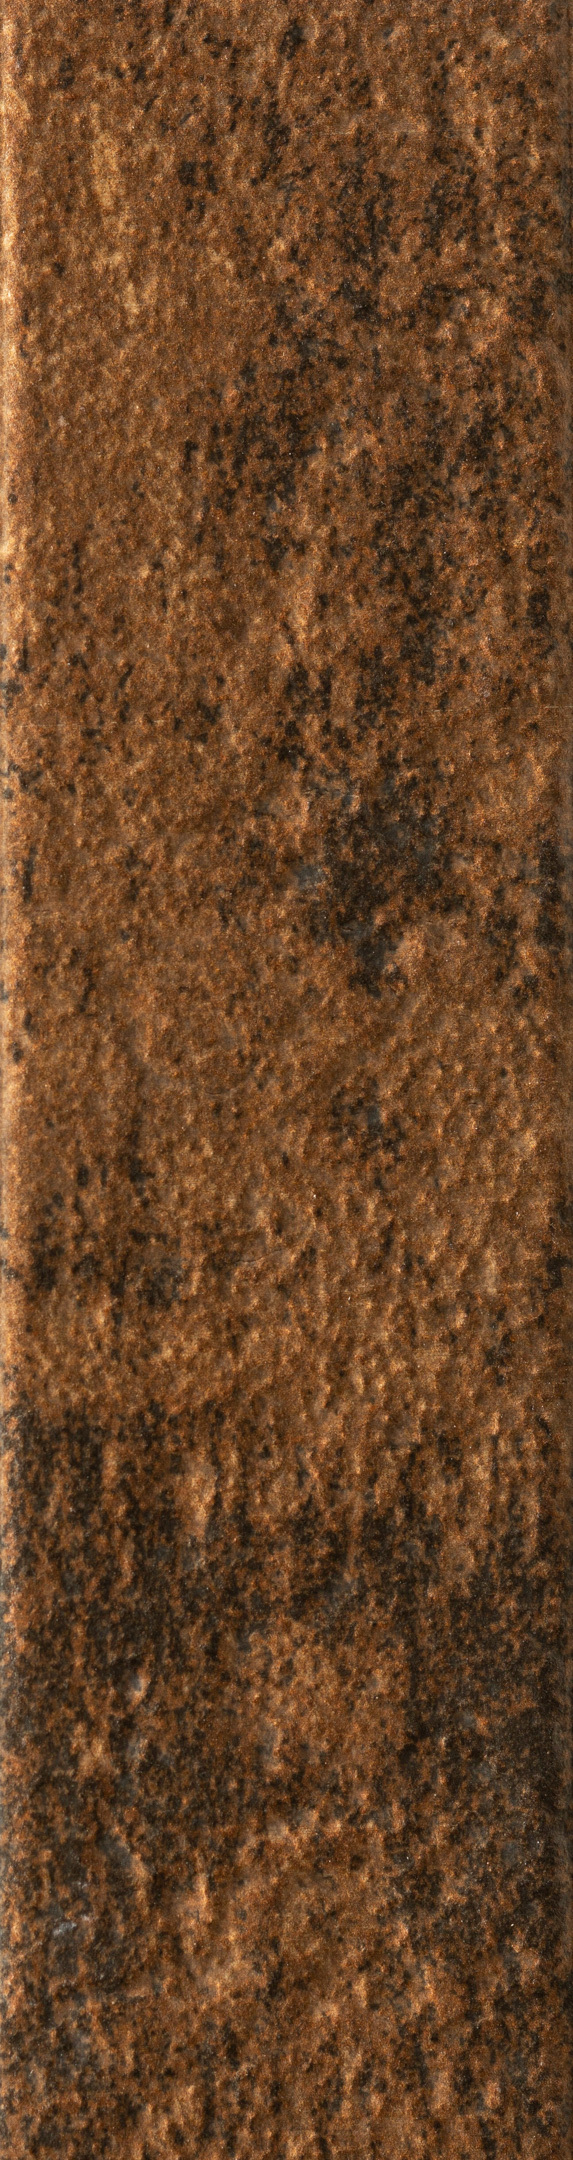 Клинкерная плитка Керамин Теннесси 3Т коричневая 245х65х7 мм (34 шт.=0,54 кв.м) плитка настенная керамин мокка 3т 27 5x40 коричневая